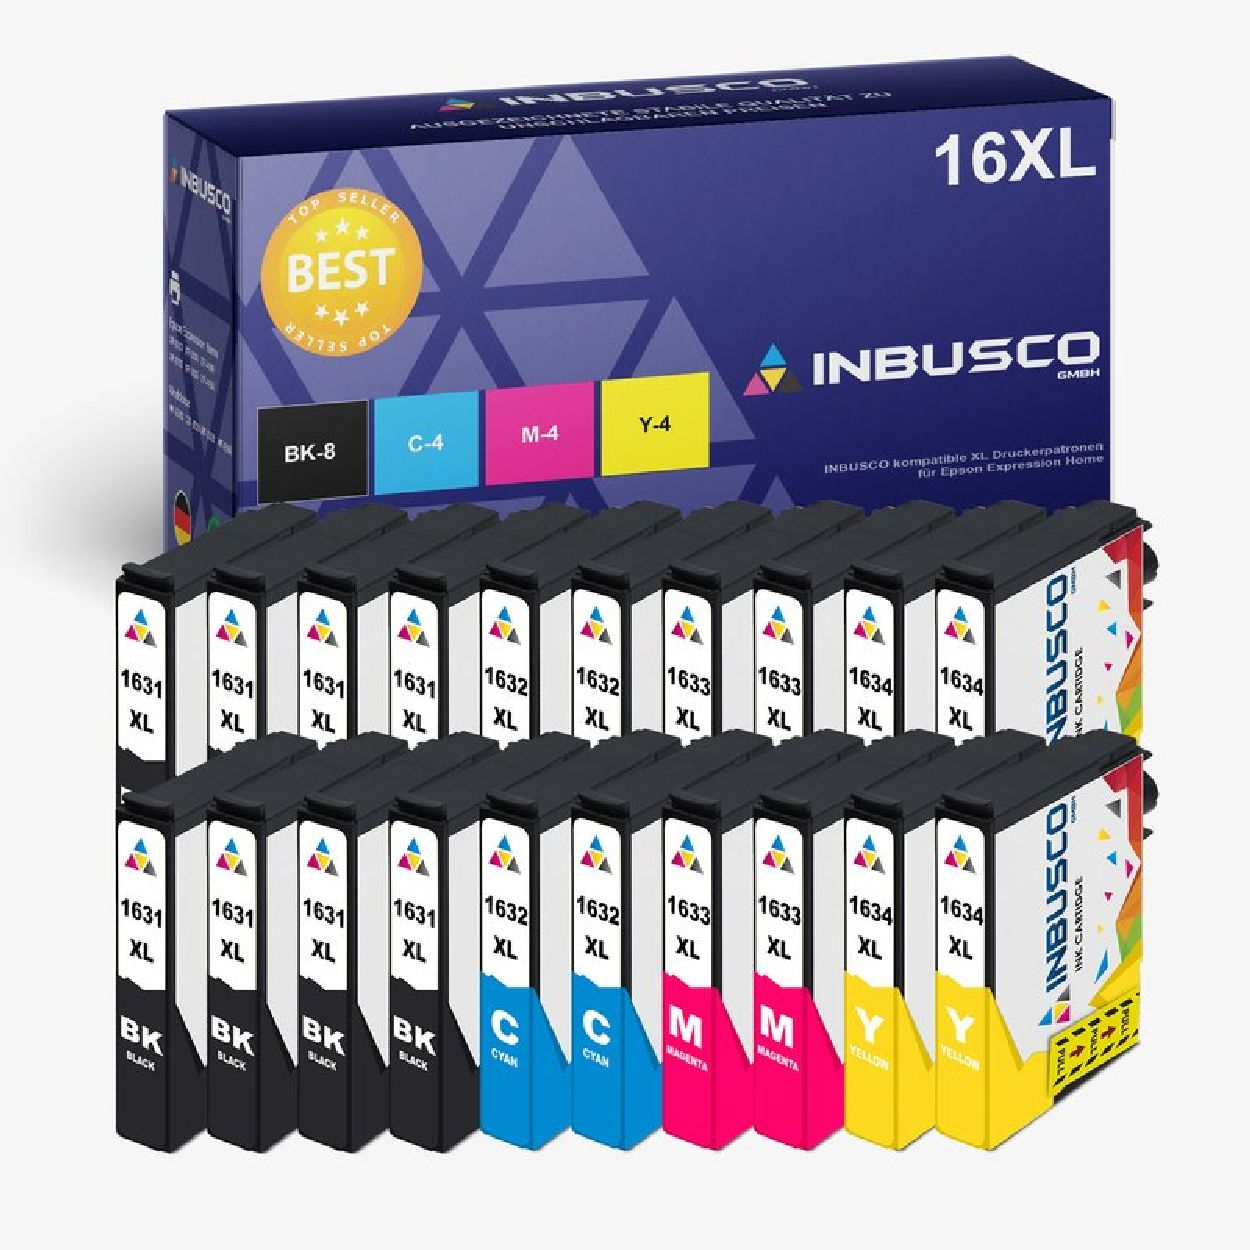 INBUSCO / KUBIS Tintenpatrone SET 16xl (20x16XL) Mehrfarbig